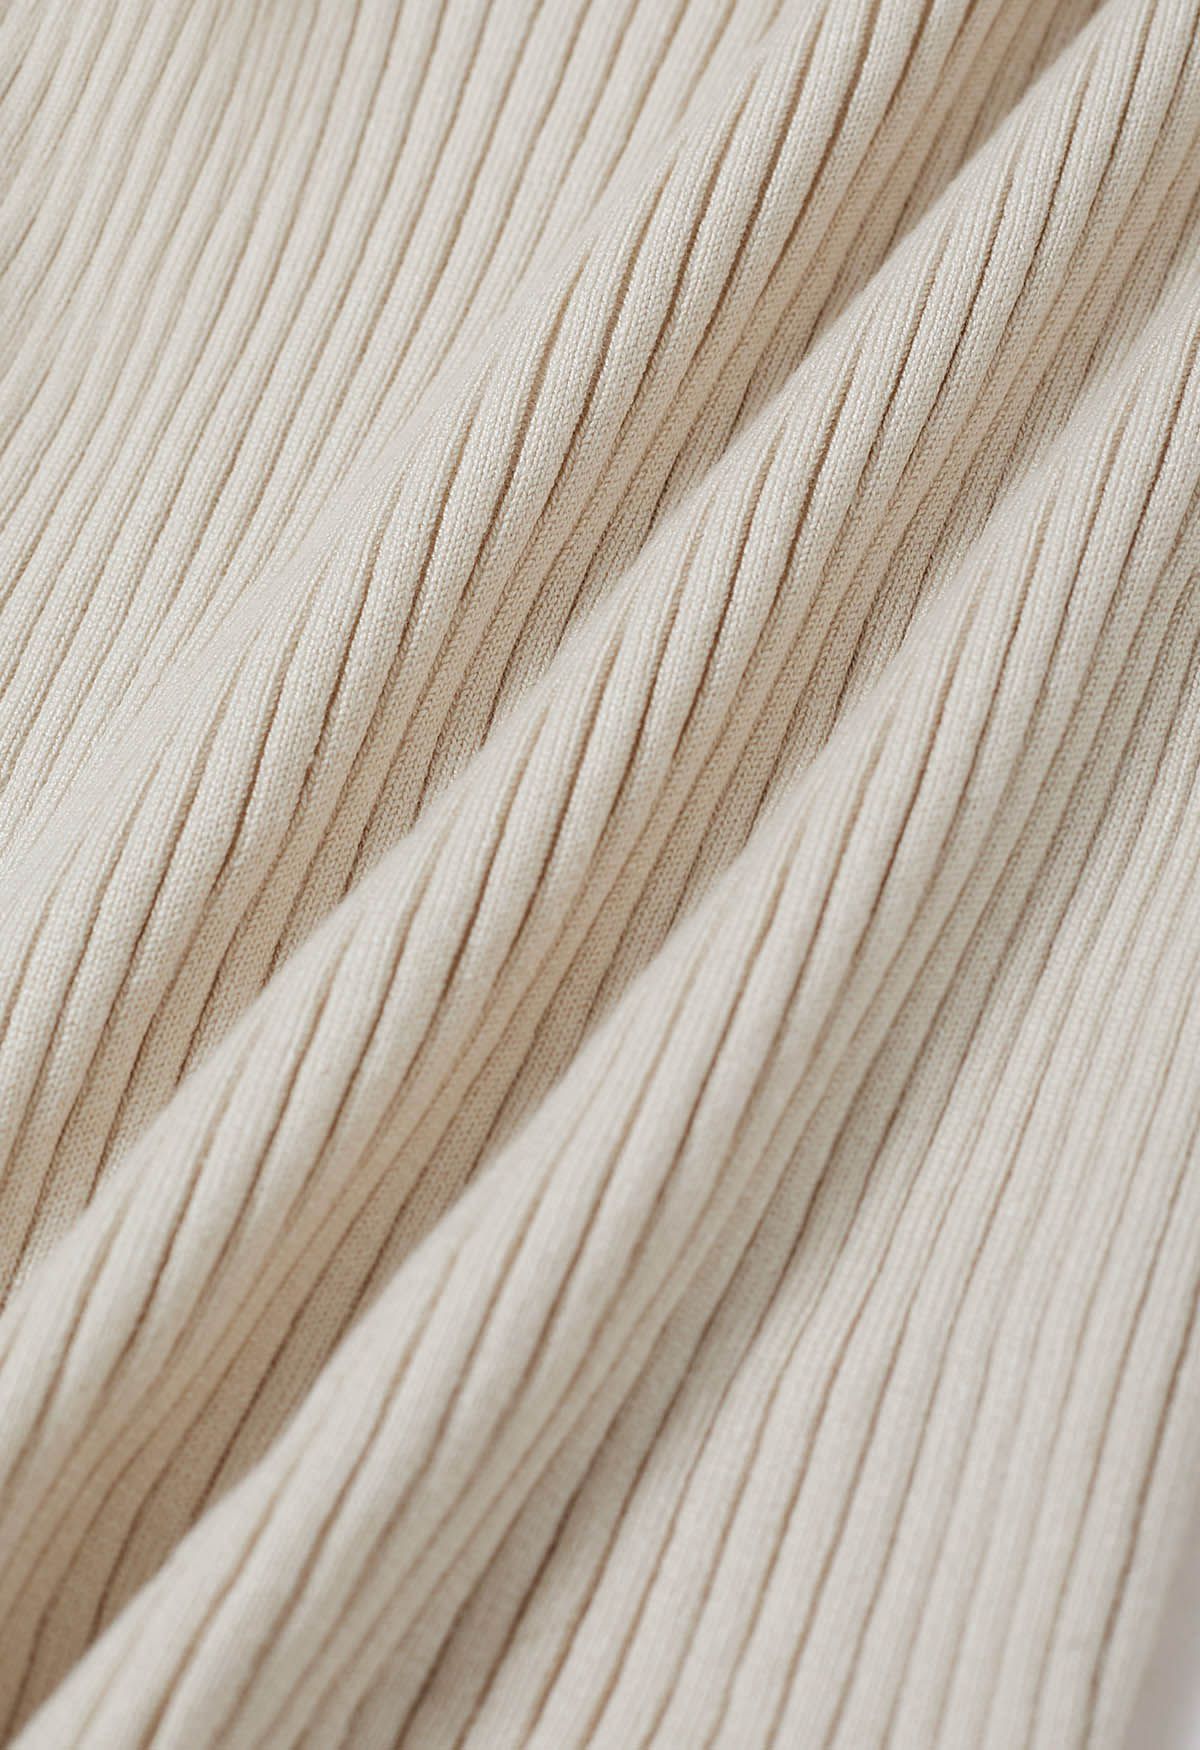 Crisscross Full Ribbed Knit Top in Cream